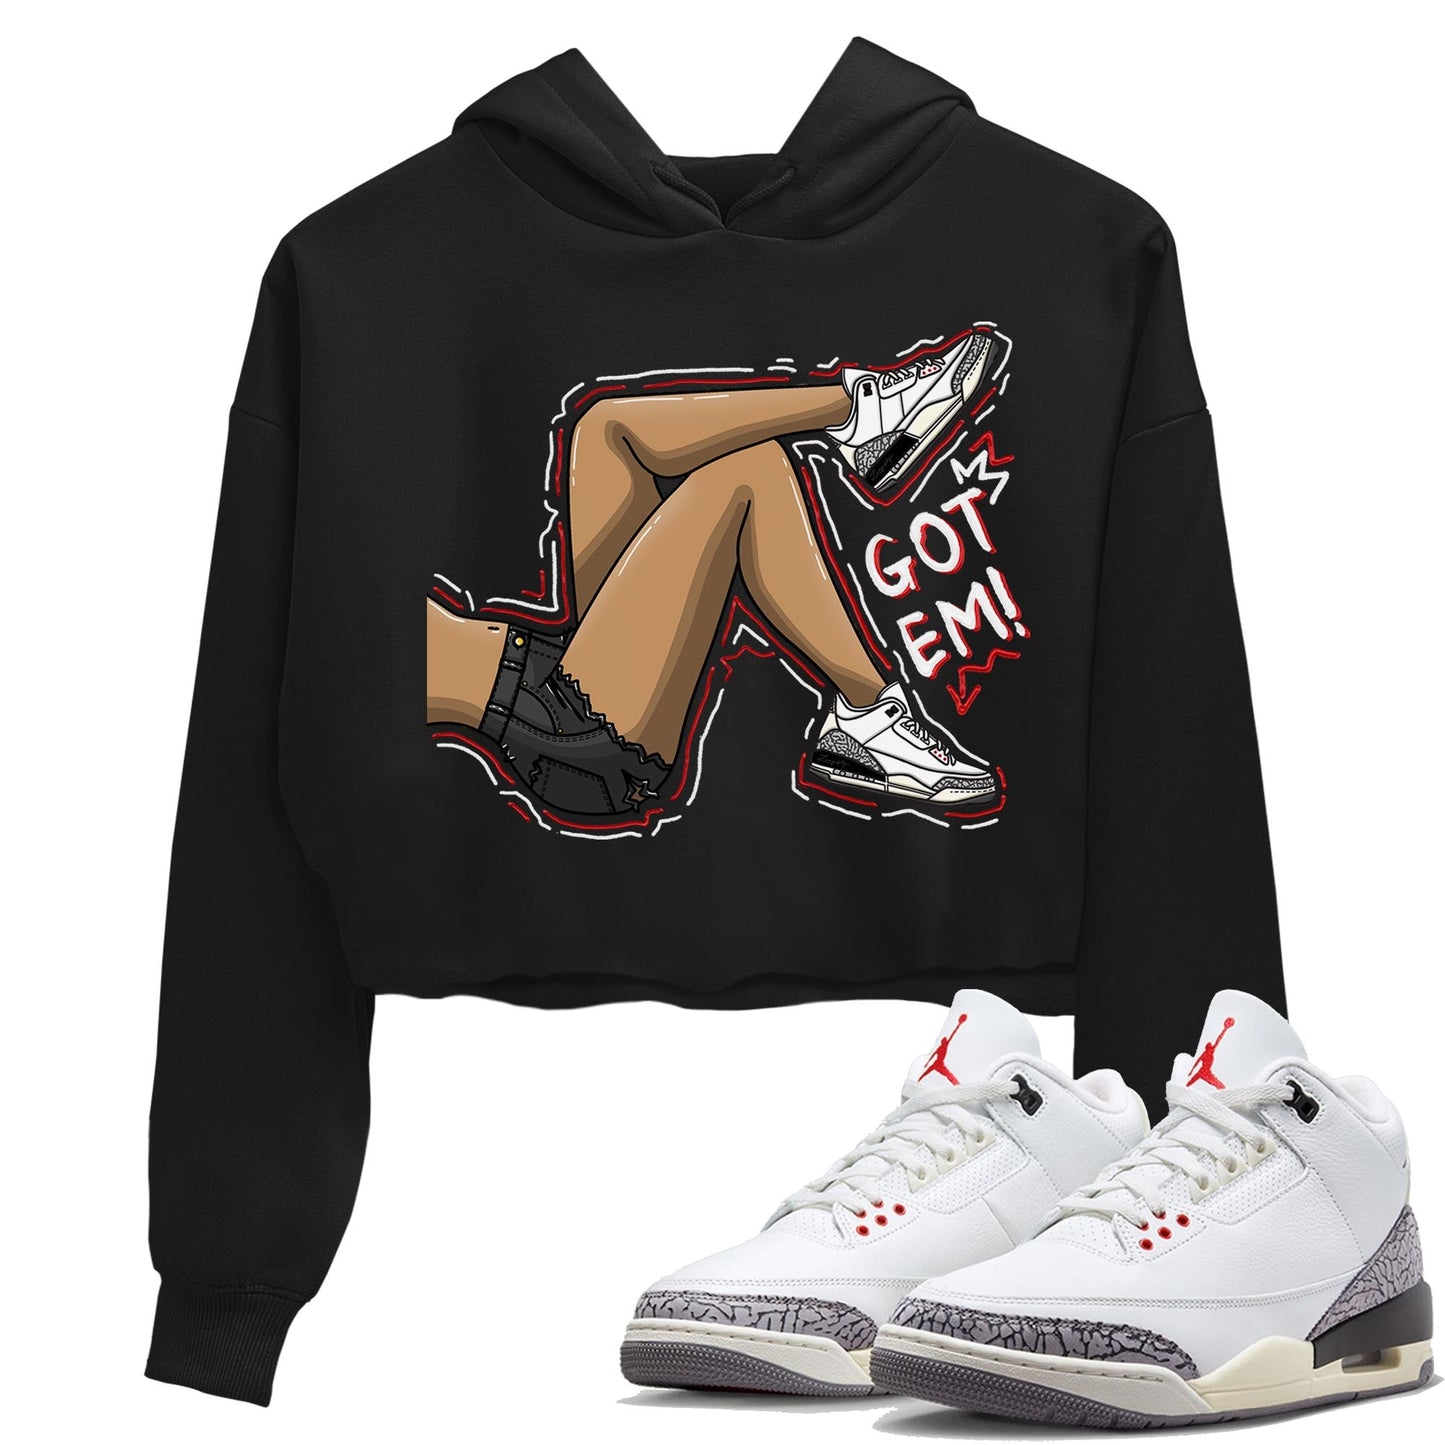 Air Jordan 3 White Cement Sneaker Match Tees Got Em Legs Streetwear Sneaker Shirt AJ 3s White Cement Sneaker Release Tees Women's Shirts Black 1